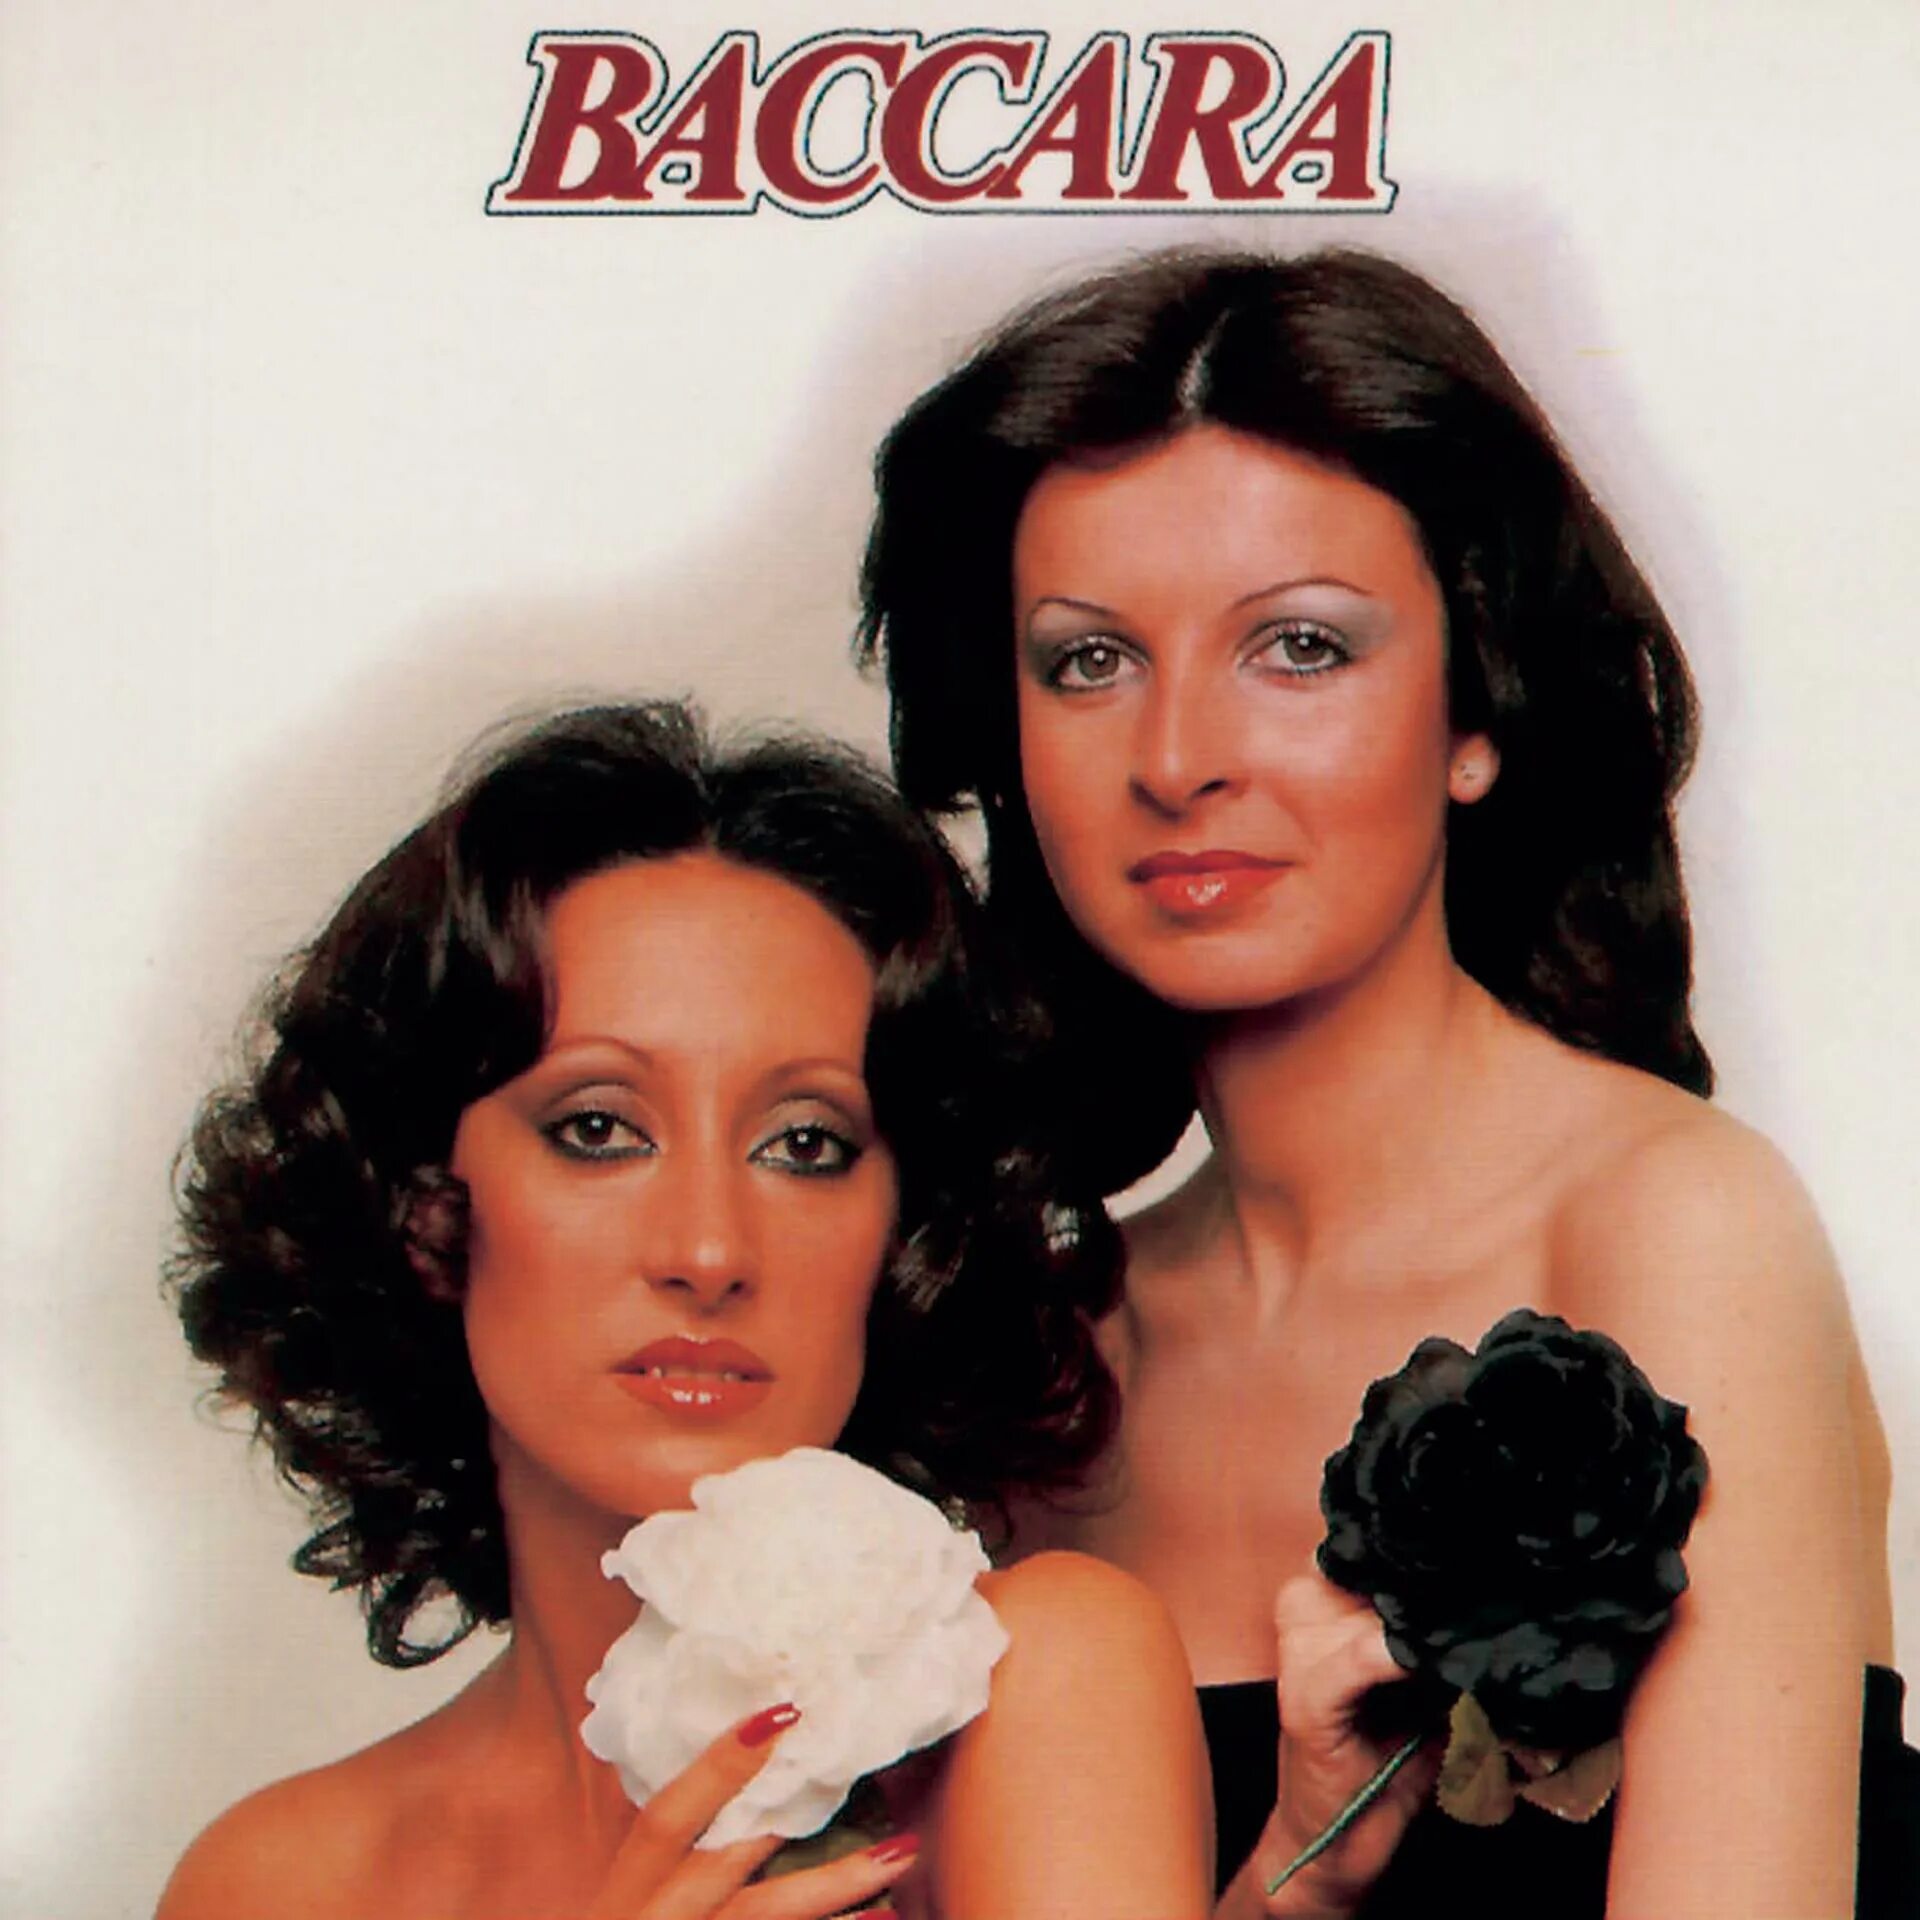 Баккара mp3. Группа Baccara. Группа Baccara 1978. Группа баккара в молодости.